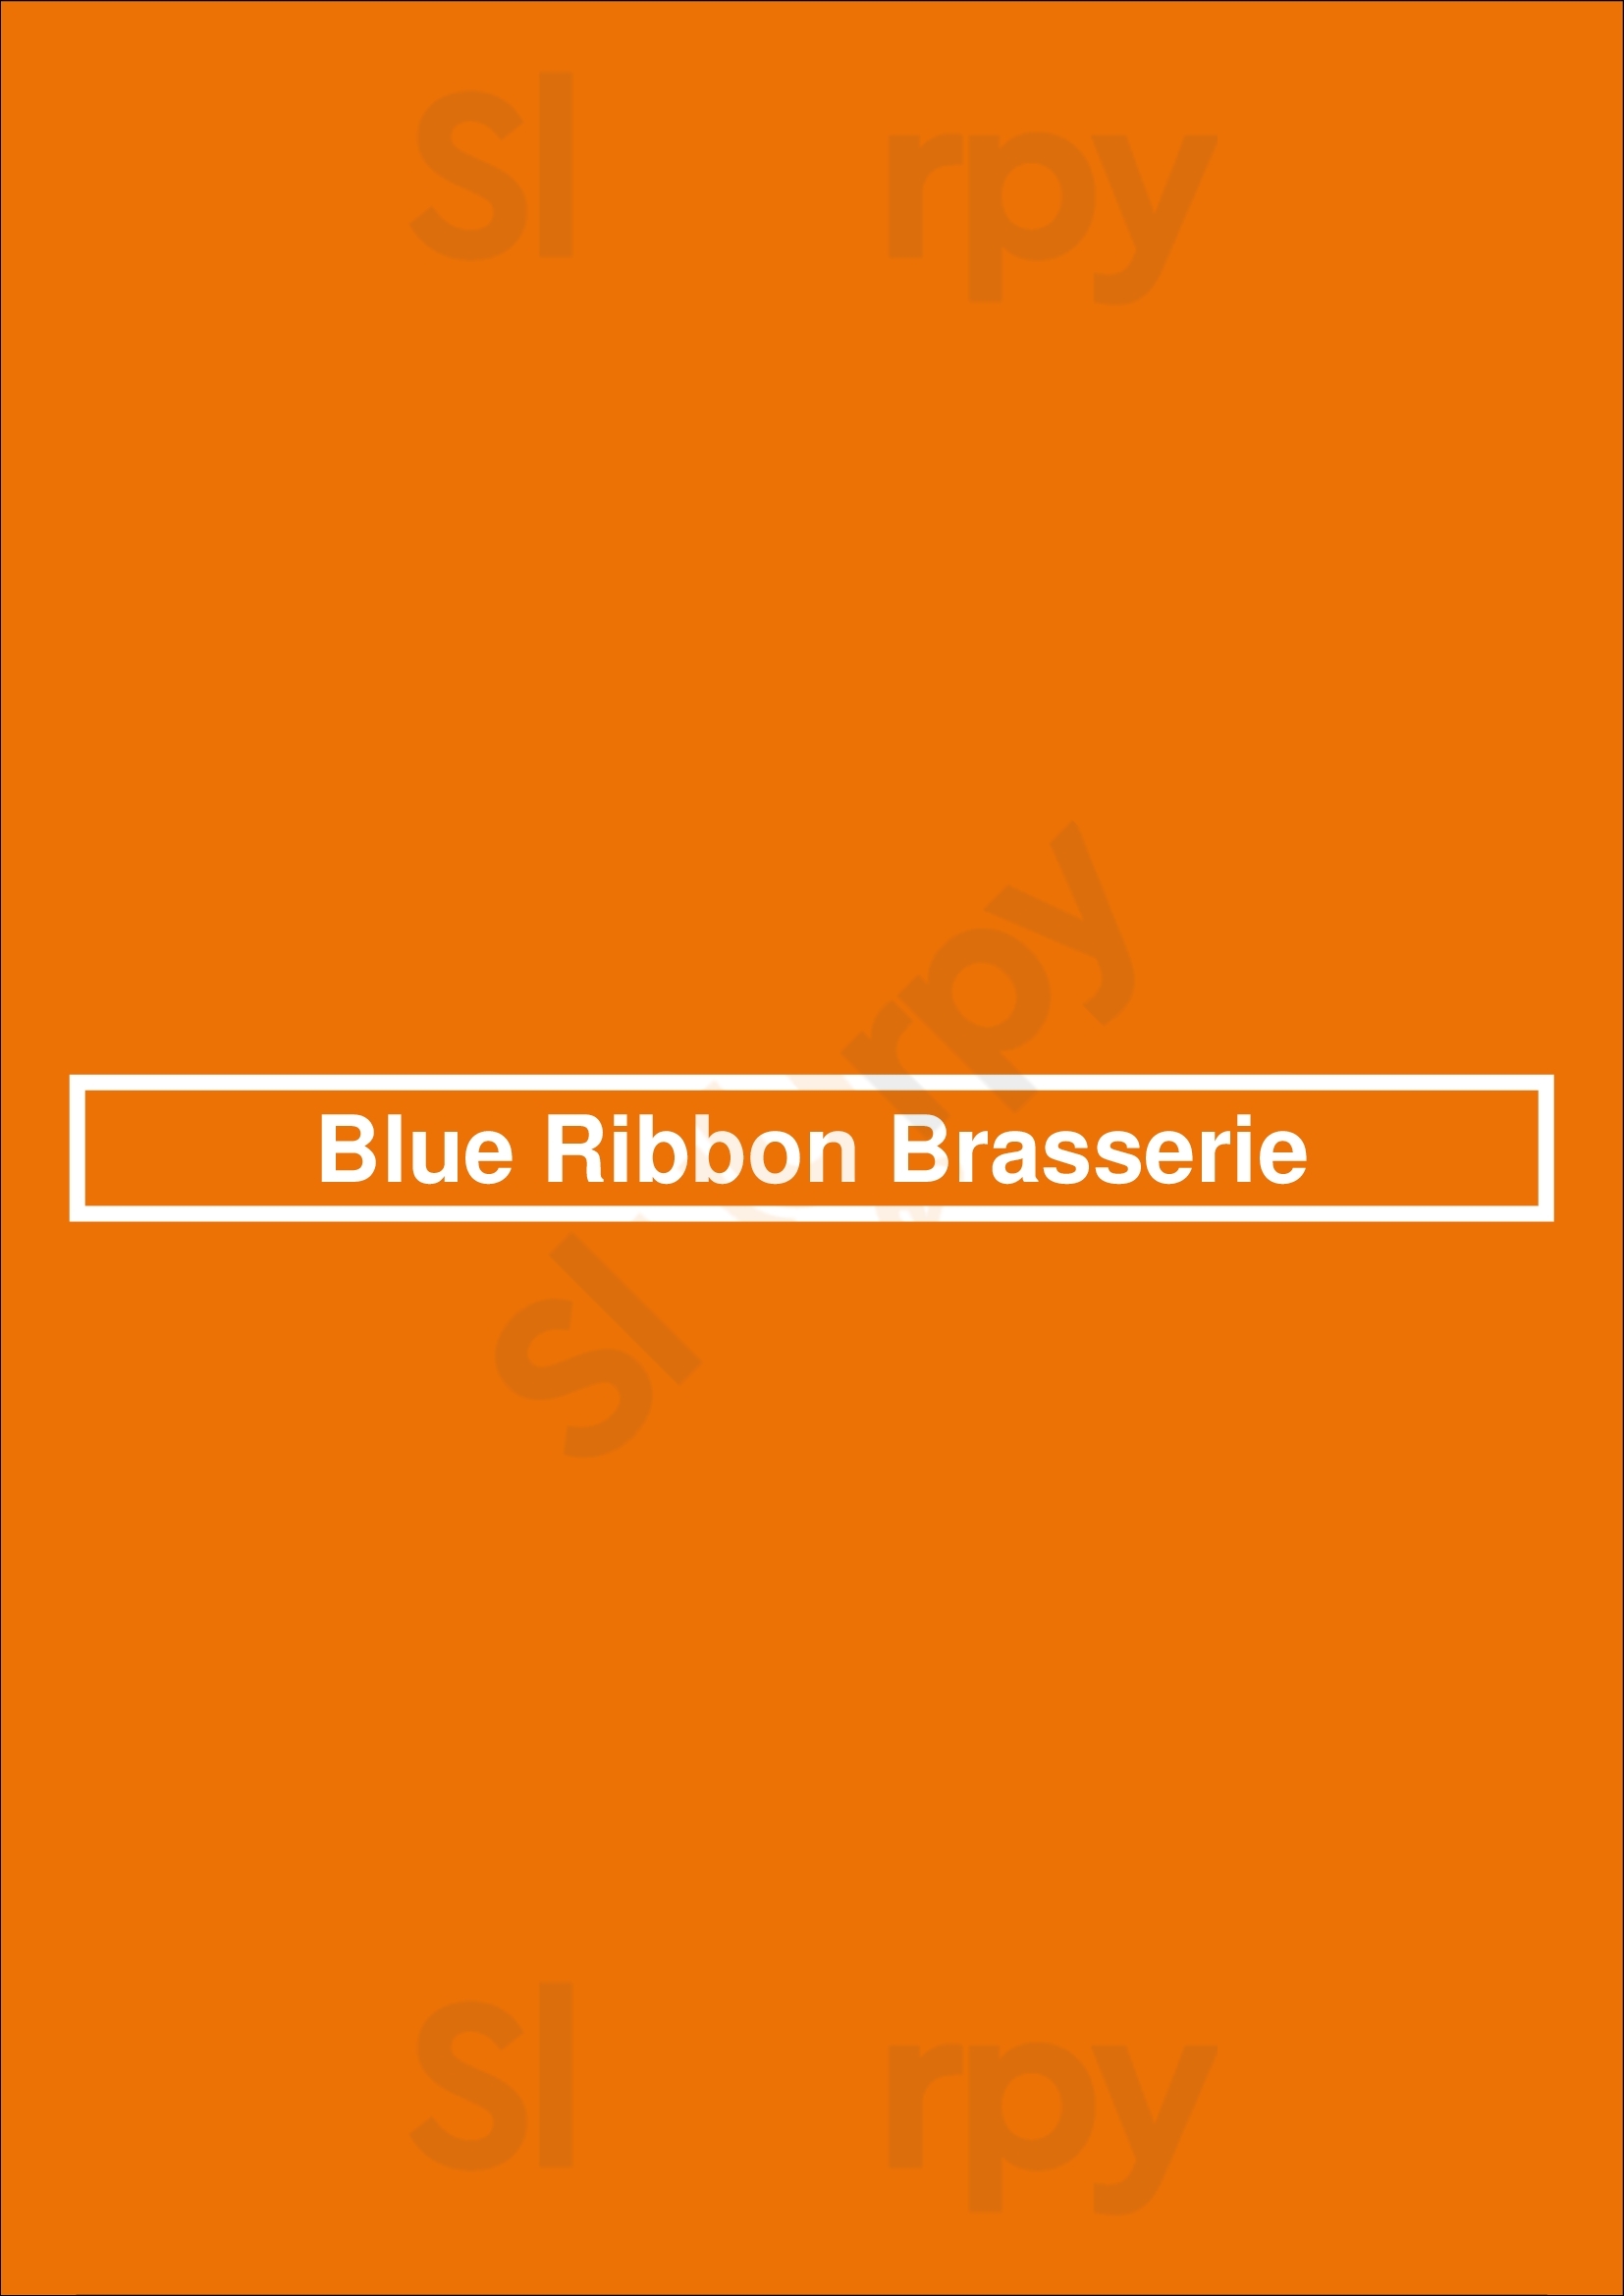 Blue Ribbon Brasserie New York City Menu - 1